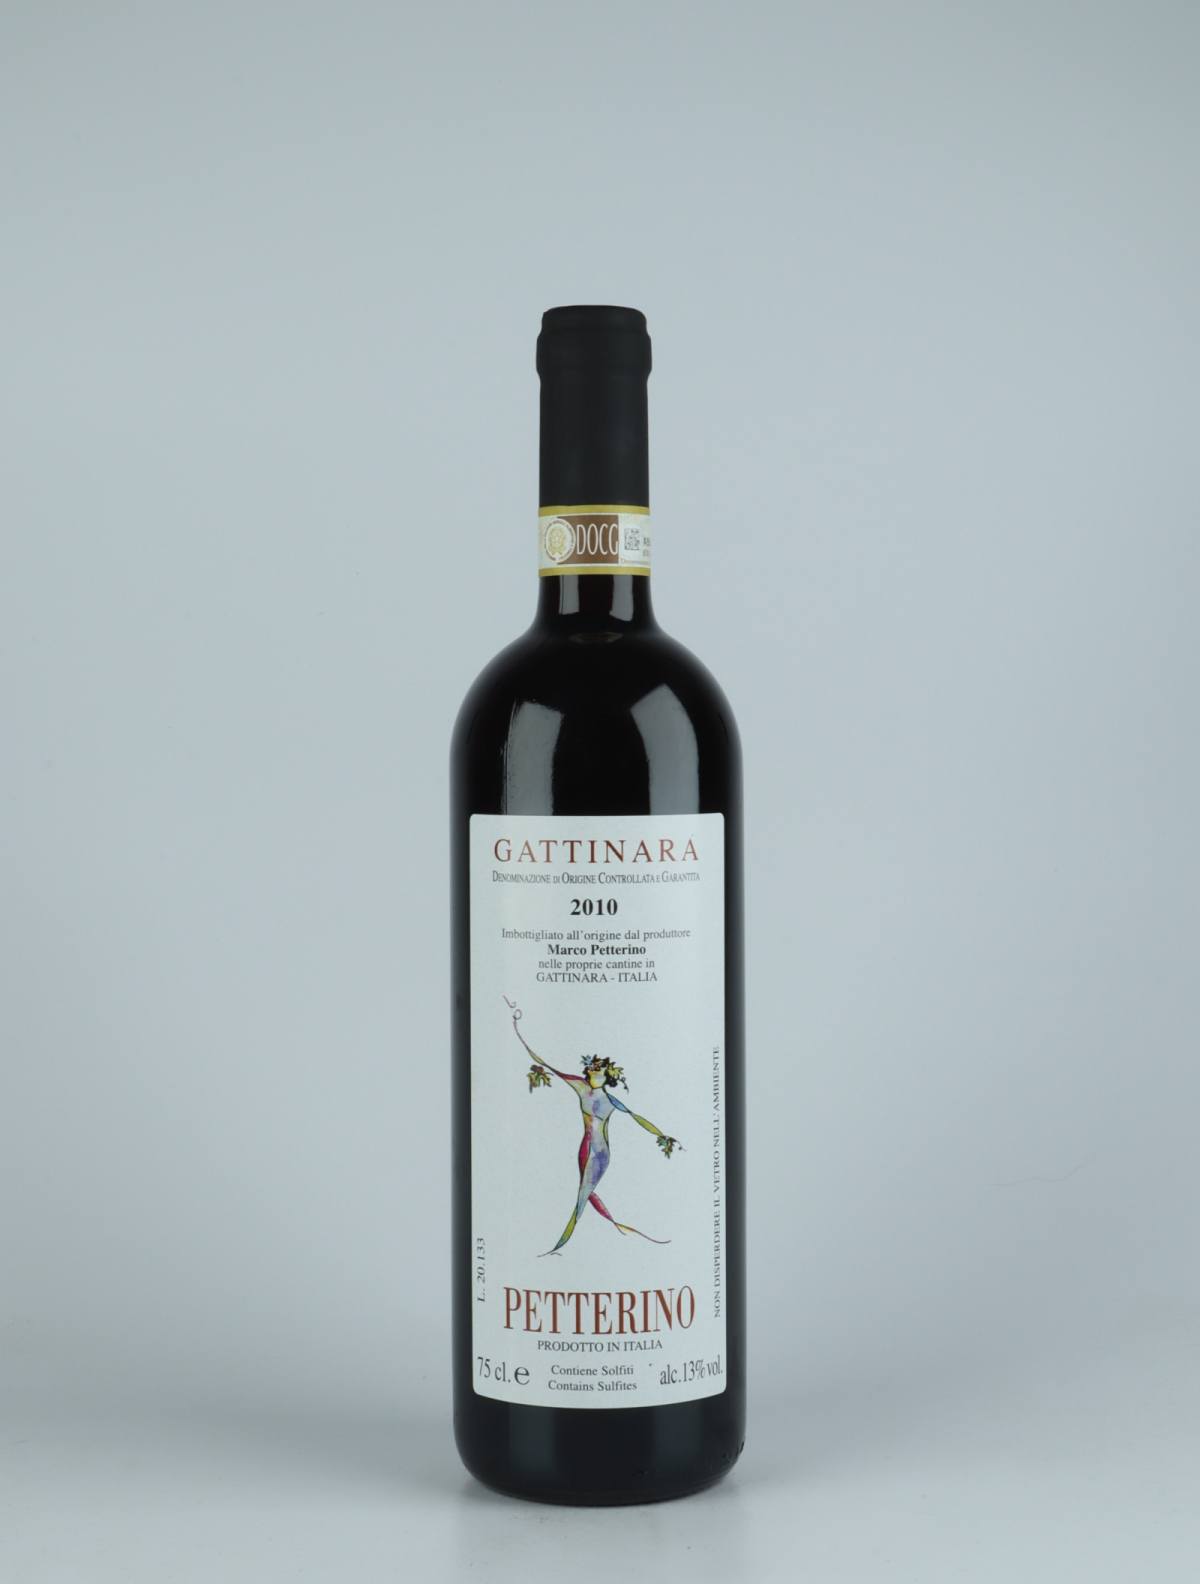 En flaske 2010 Gattinara Rødvin fra Petterino, Piemonte i Italien